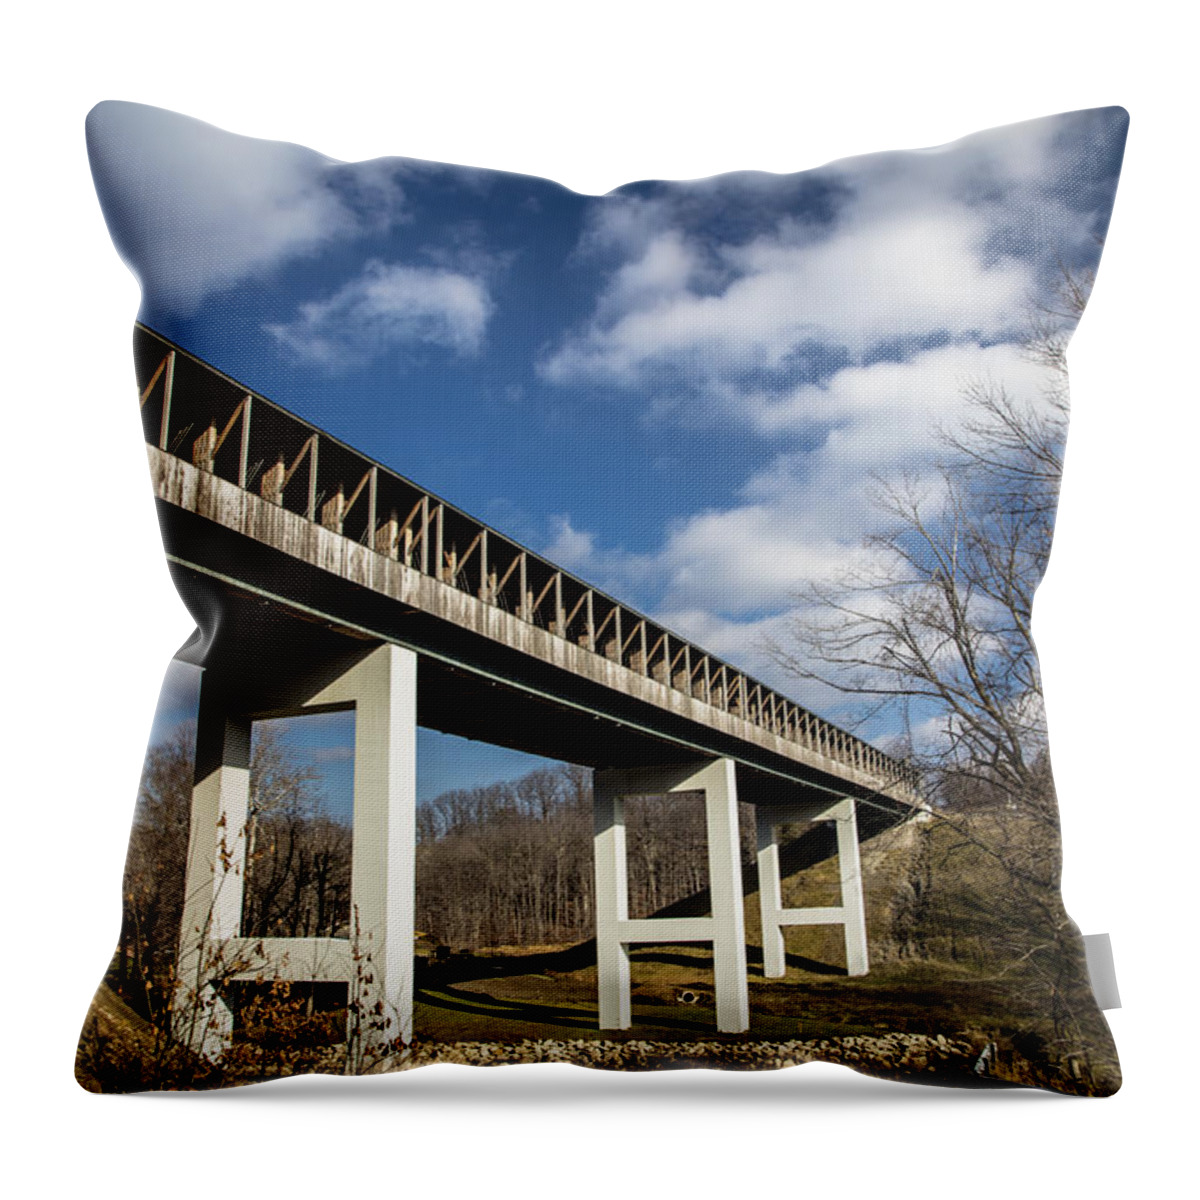 Smolen Gulf Bridge Throw Pillow featuring the photograph Smolen Gulf Bridge 3 by John McGraw